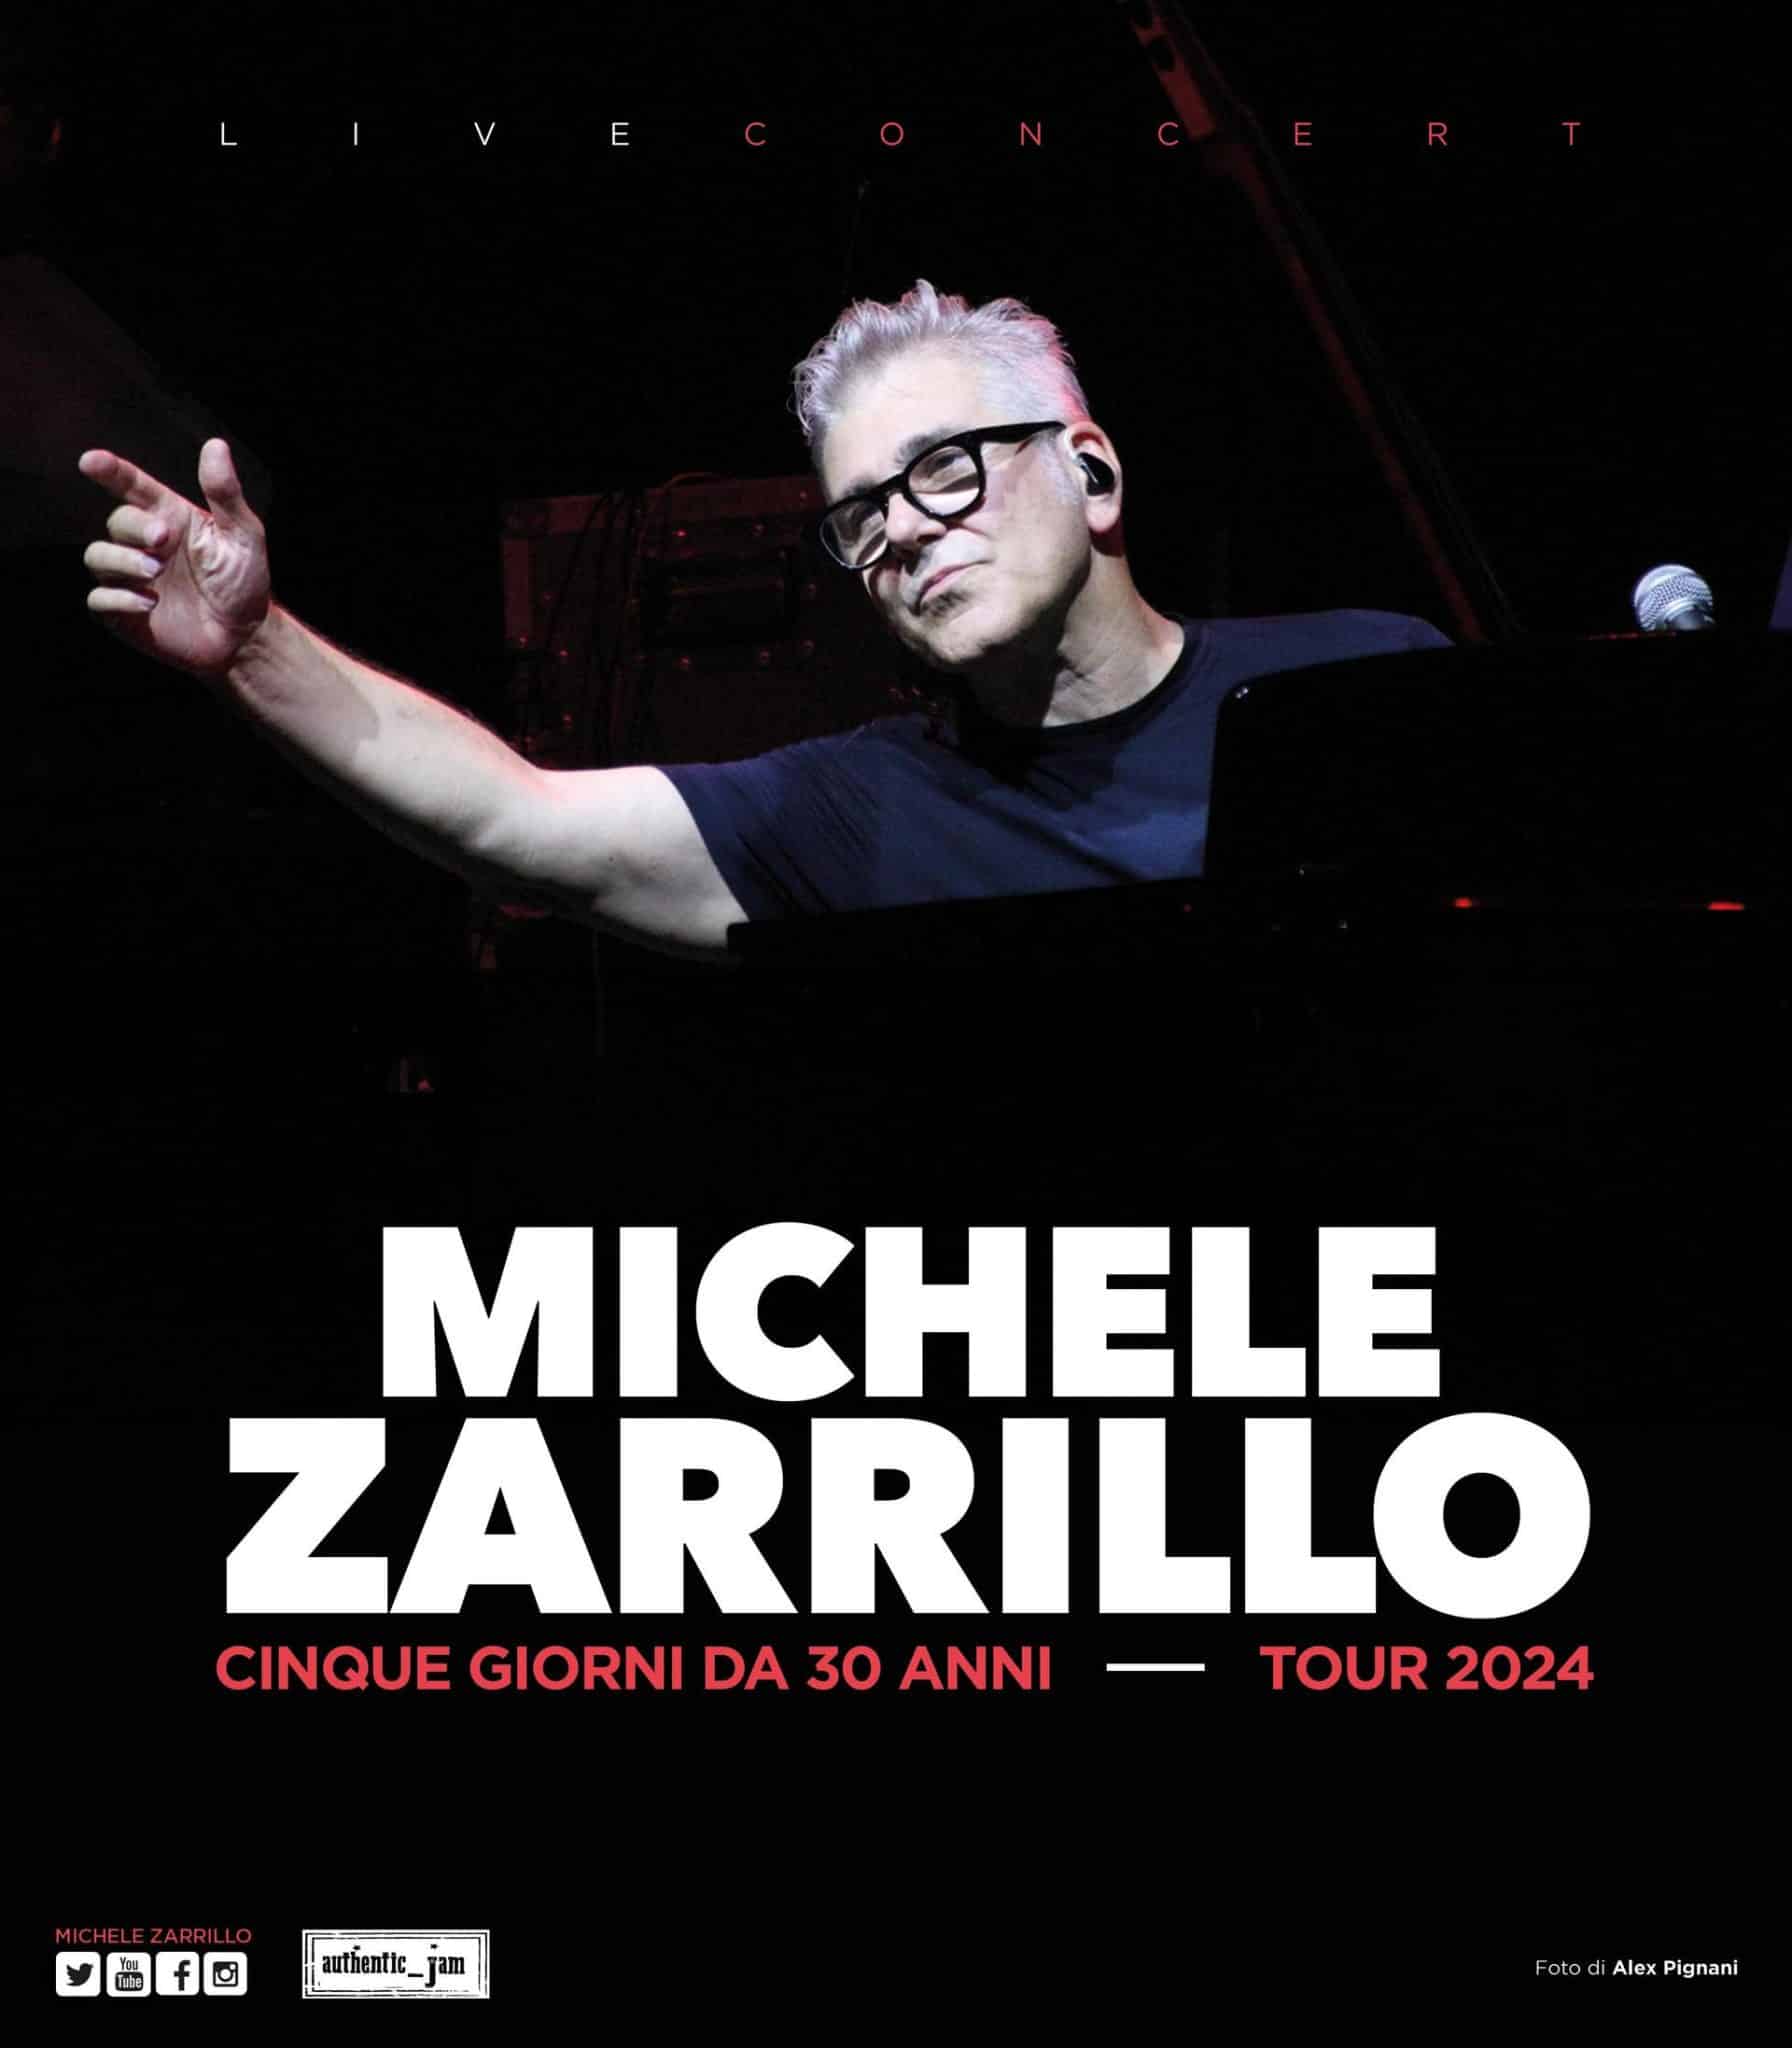 Michele Zarrillo tour